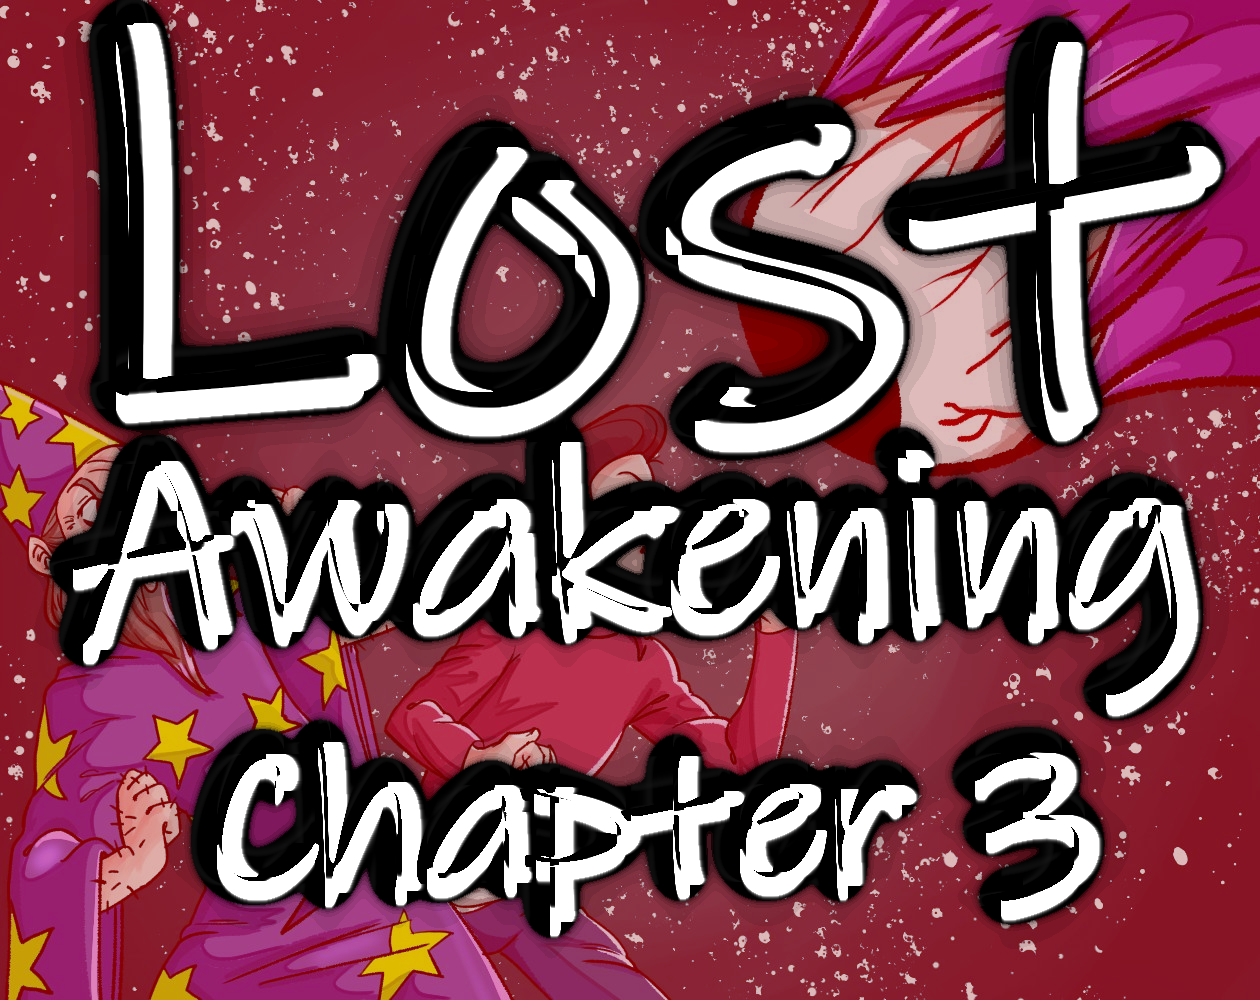 Lost Awakening, Chapter 3 Presskit Image